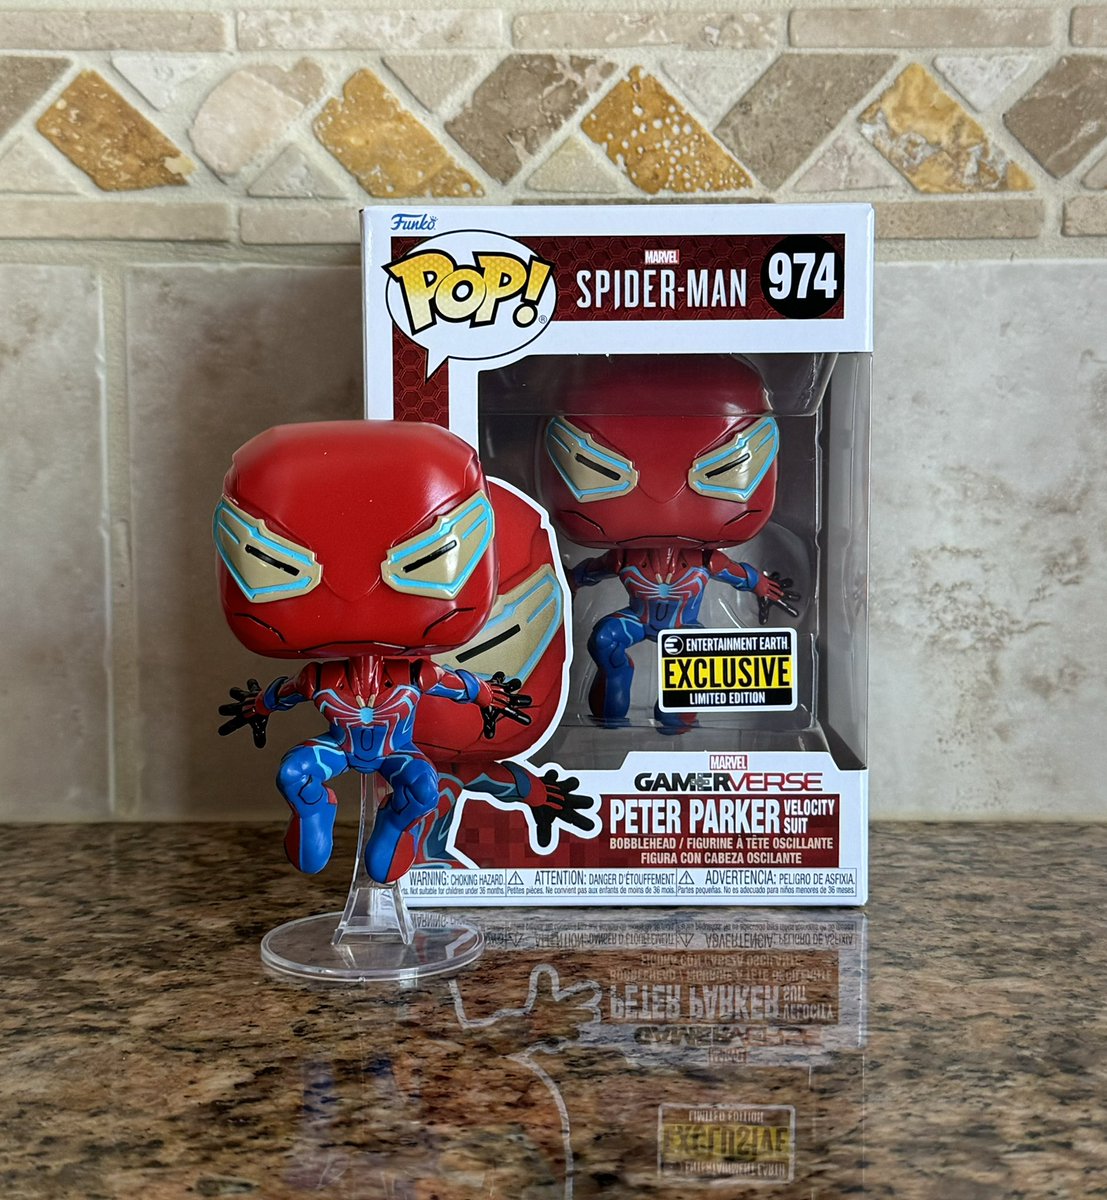 📭📦 Peter Parker has arrived in his Velocity Suit!
.
#Marvel #SpiderMan #SpiderMan2 #PeterParker #Funko #FunkoPop #FunkoPopVinyl #Pop #PopVinyl #Collectibles #Collectible #FunkoCollector #FunkoPops #Collector #Toy #Toys #DisTrackers